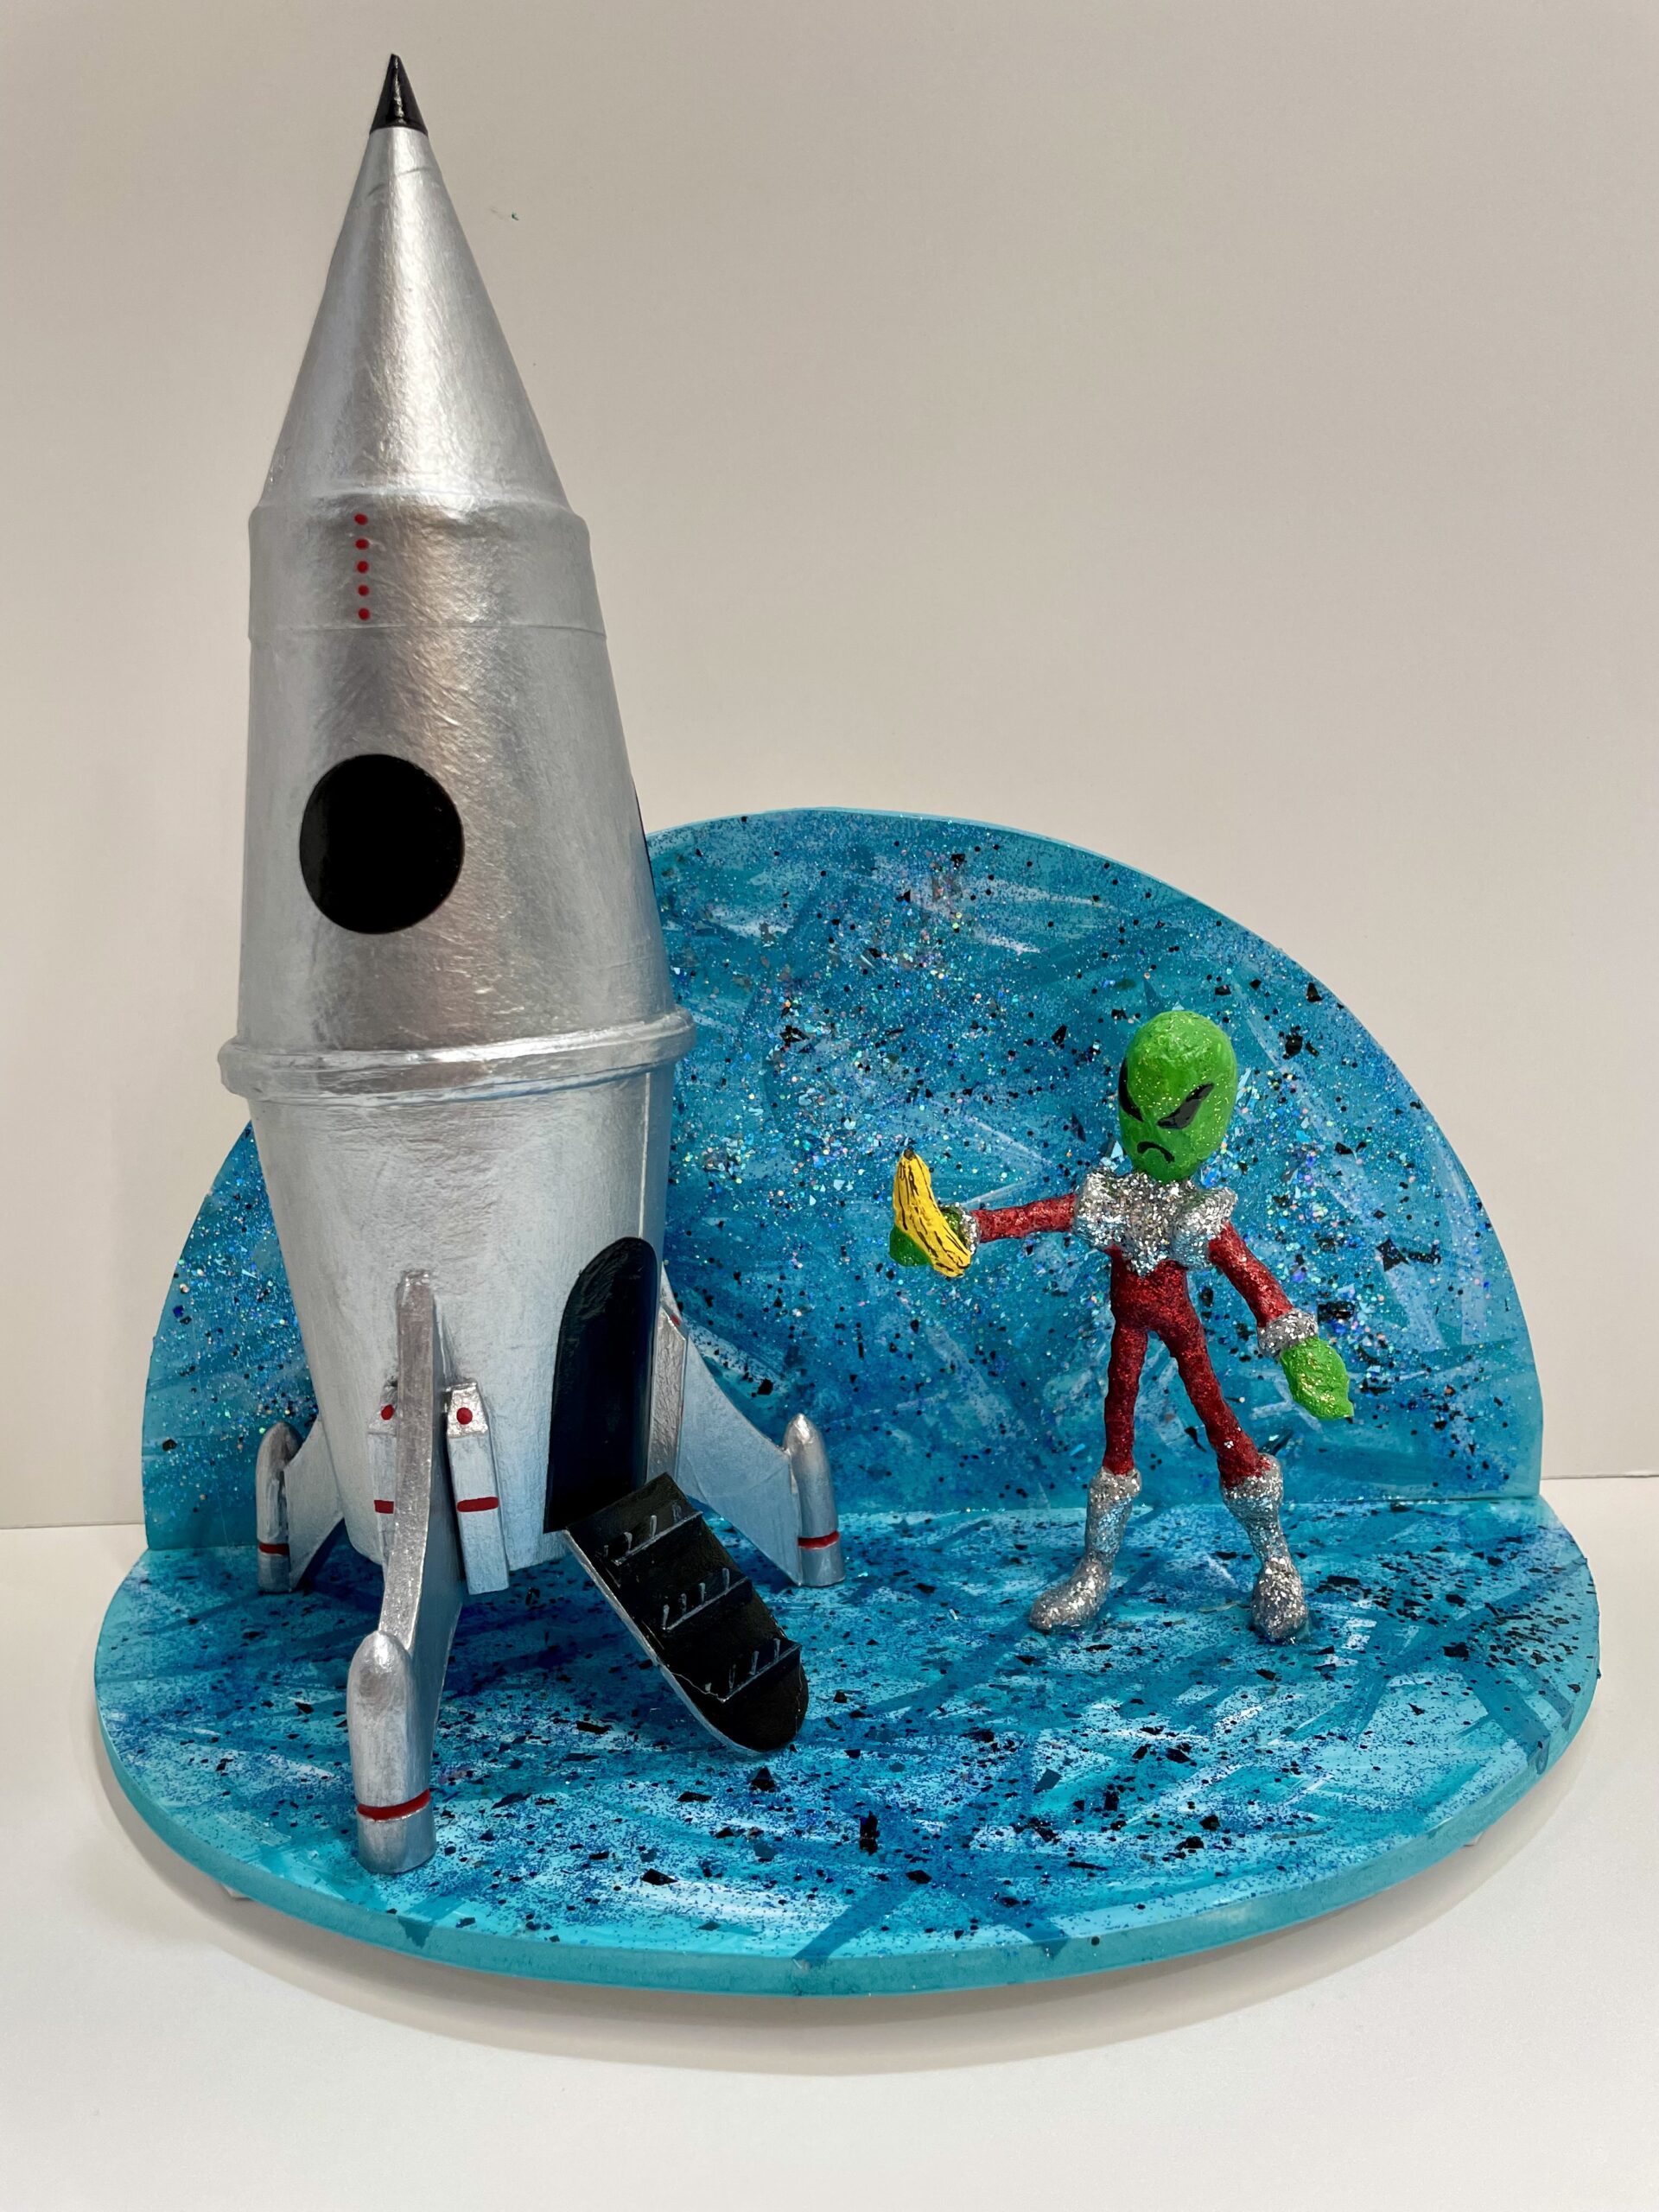 Featured Image for Children’s Studio: Rocket Man